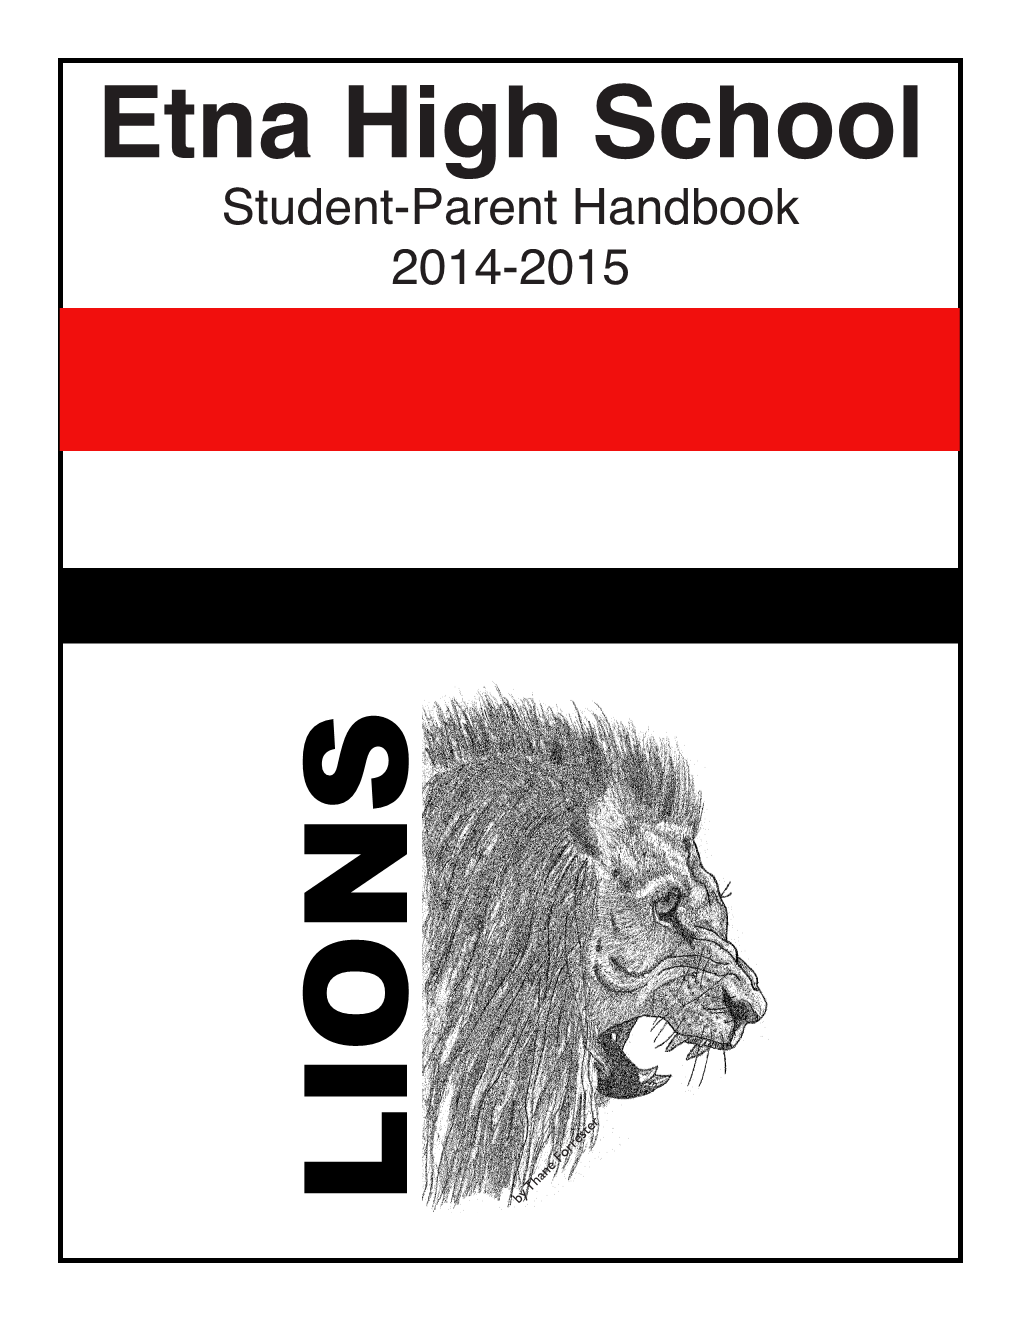 Etna High School Student-Parent Handbook 2014-2015